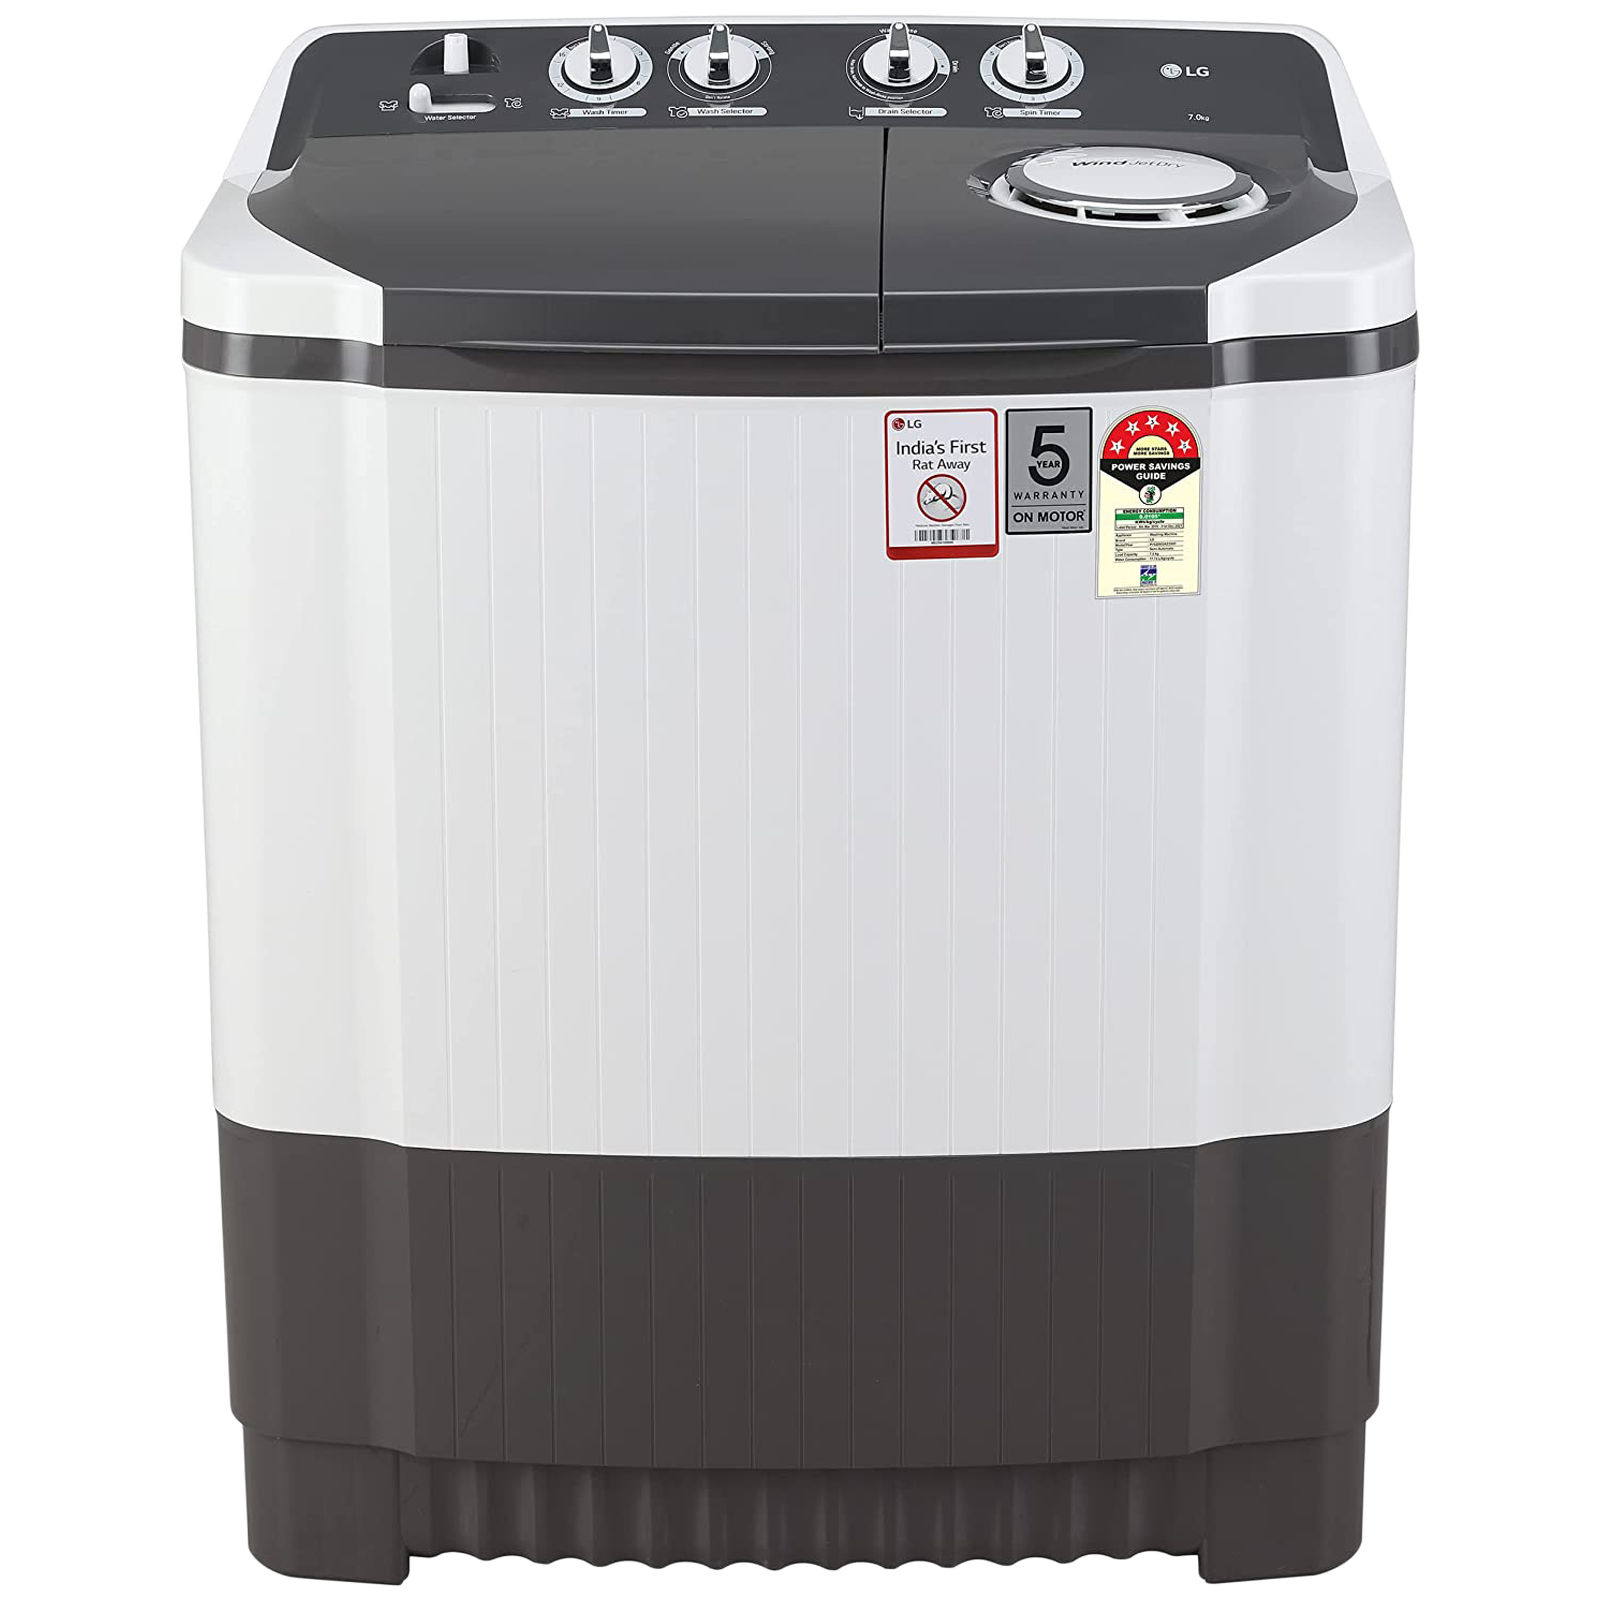 LG 7 kg 5 Star Semi Automatic Washing Machine with Wind Jet Dry (P7020NGAZ, Dark Gray)_1